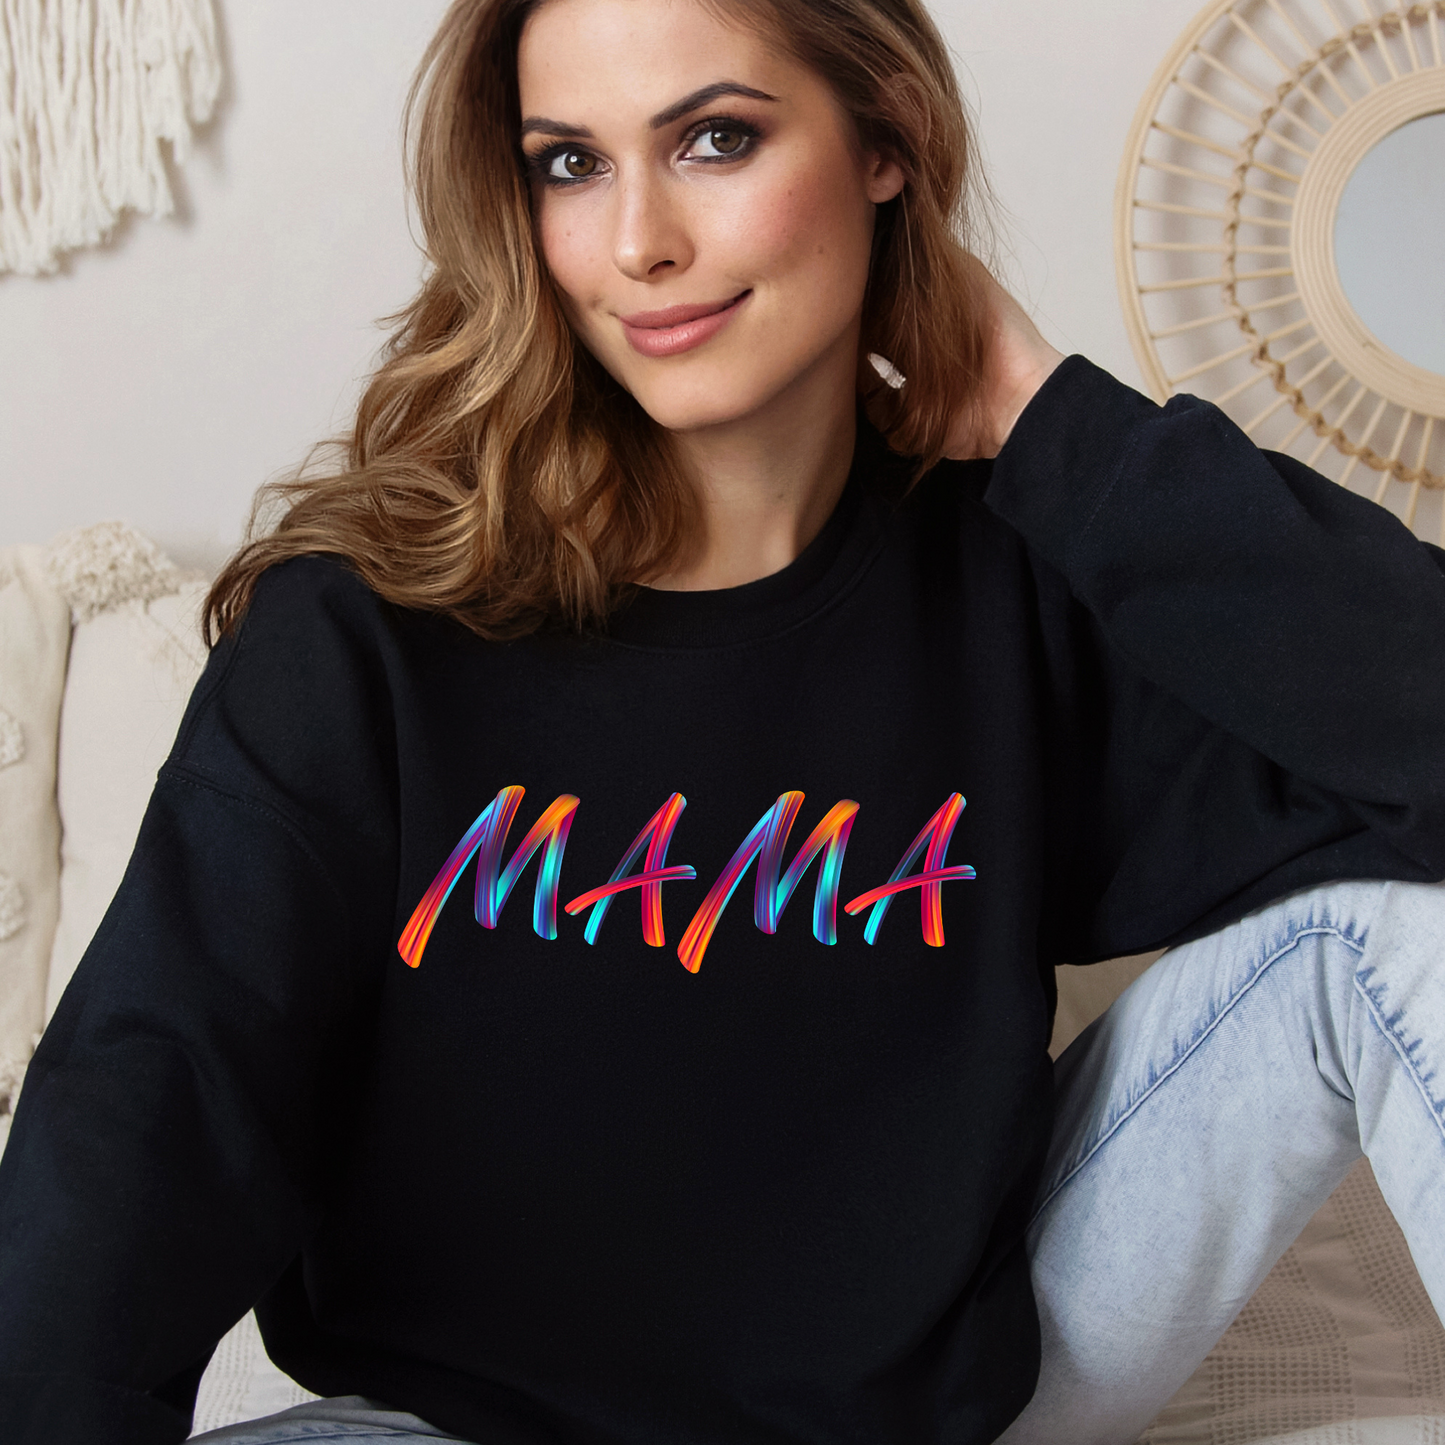 Mama Crewneck Sweatshirt - Unisex Sweatshirt - Matching Family Outfit